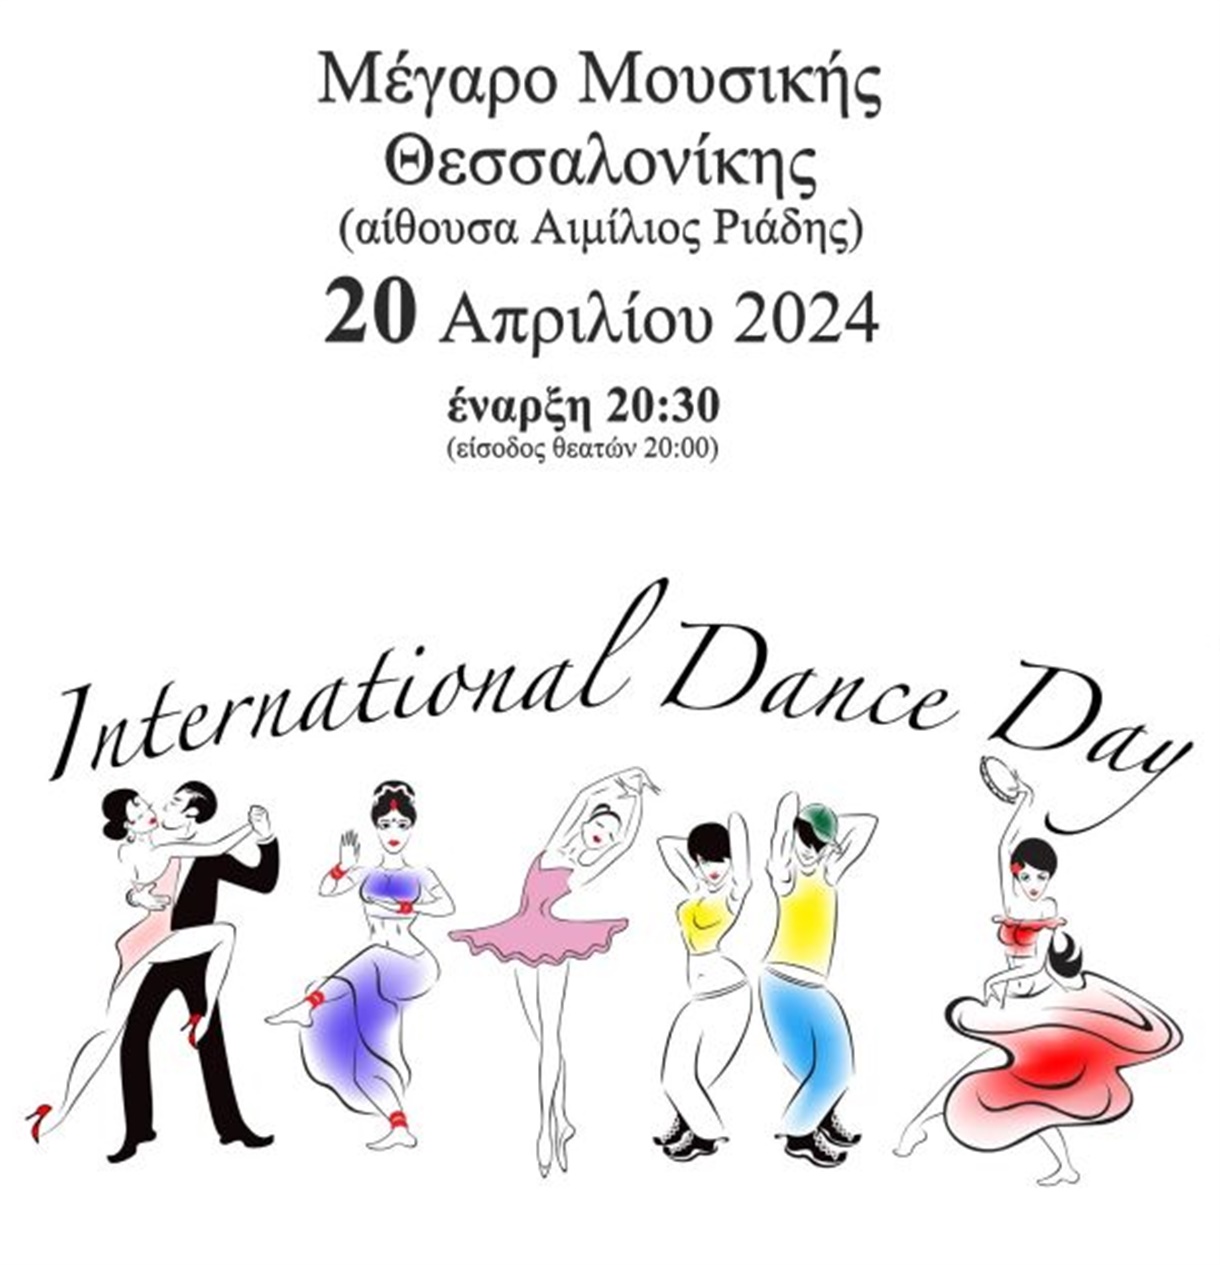 INTERNATIONAL DAY OF DANCE